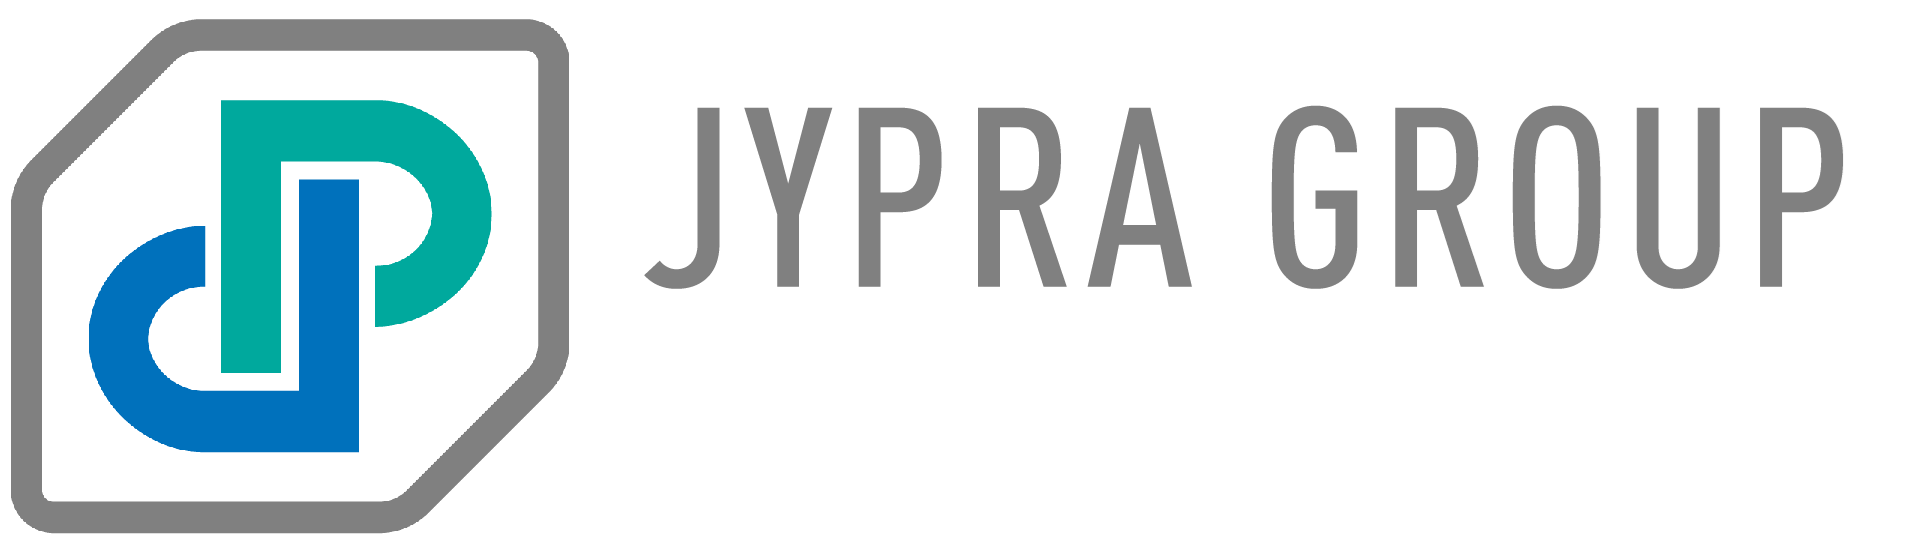 Jypra Group